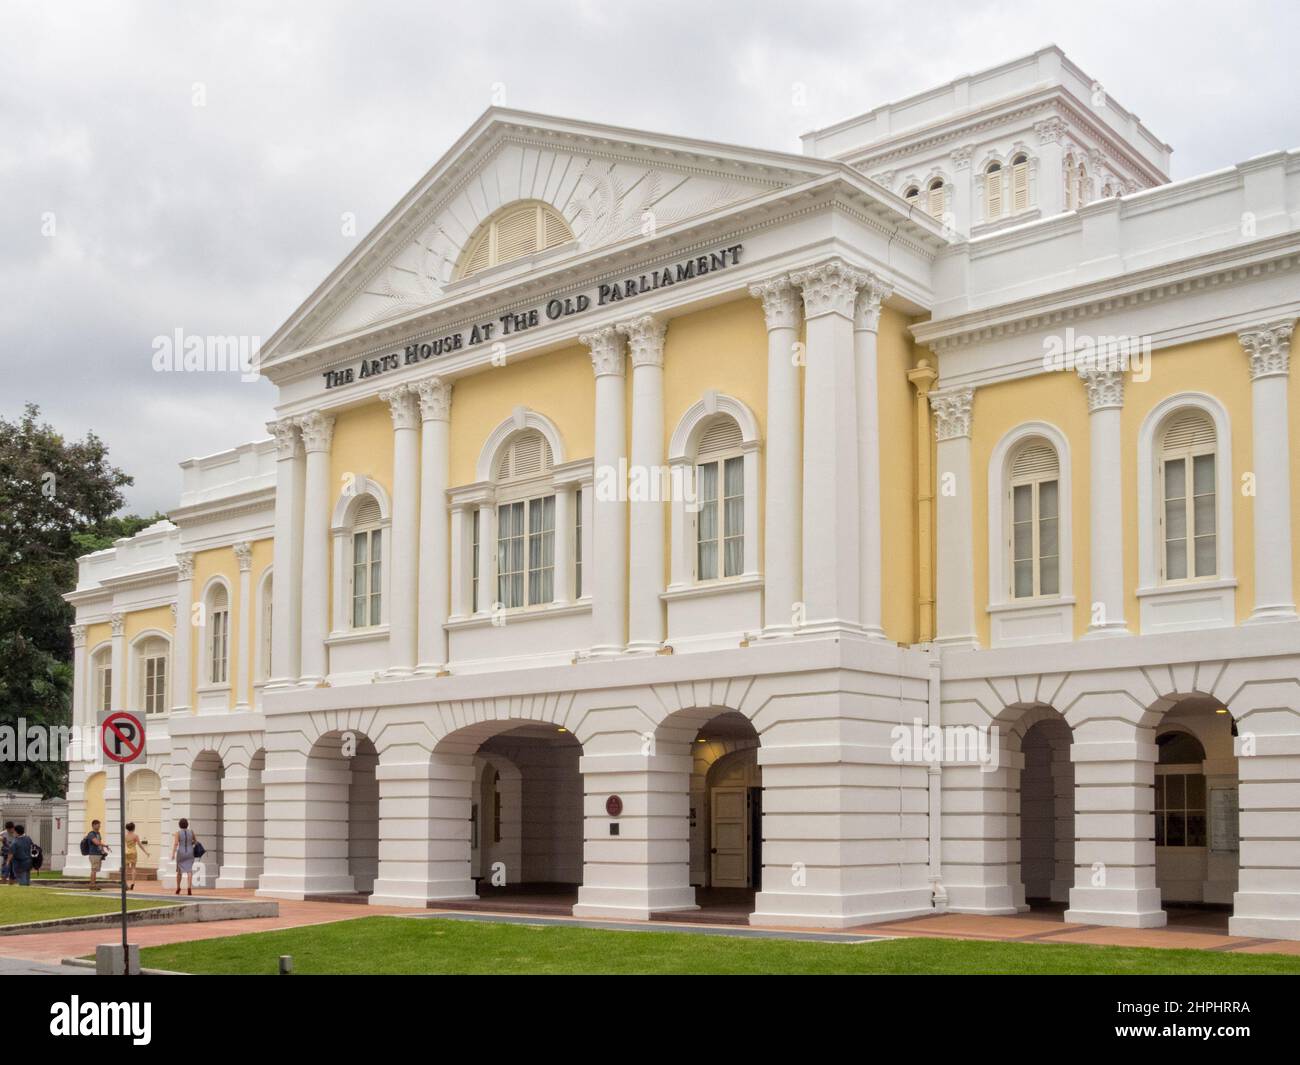 Das Arts House im ehemaligen Old Parliament House ist ein multidisziplinärer Kunstort - Singapur Stockfoto